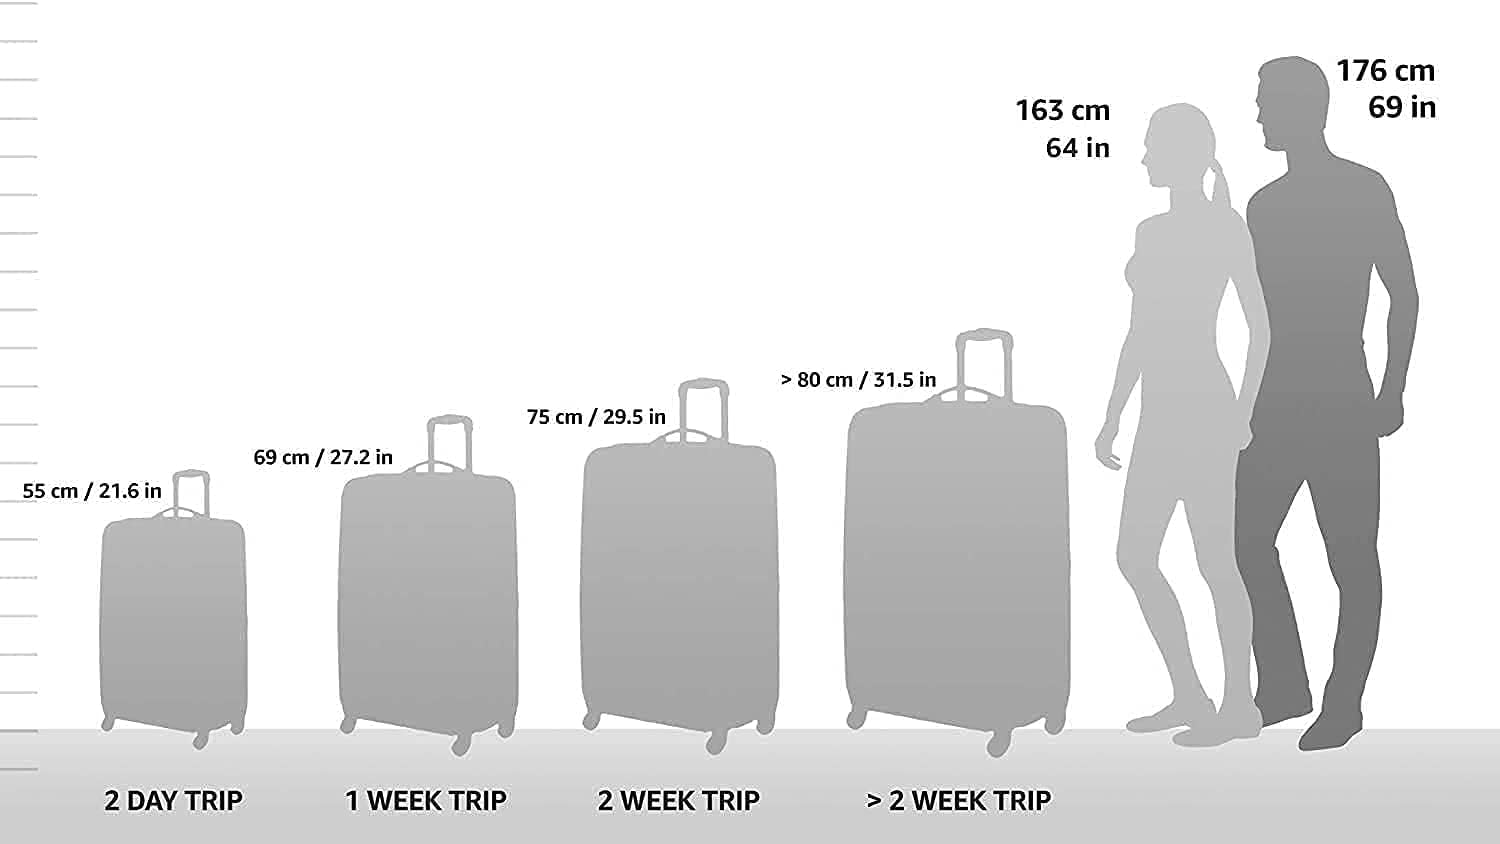 Travel Select Amsterdam Expandable Rolling Upright Luggage, Burgundy, 8-Piece Set